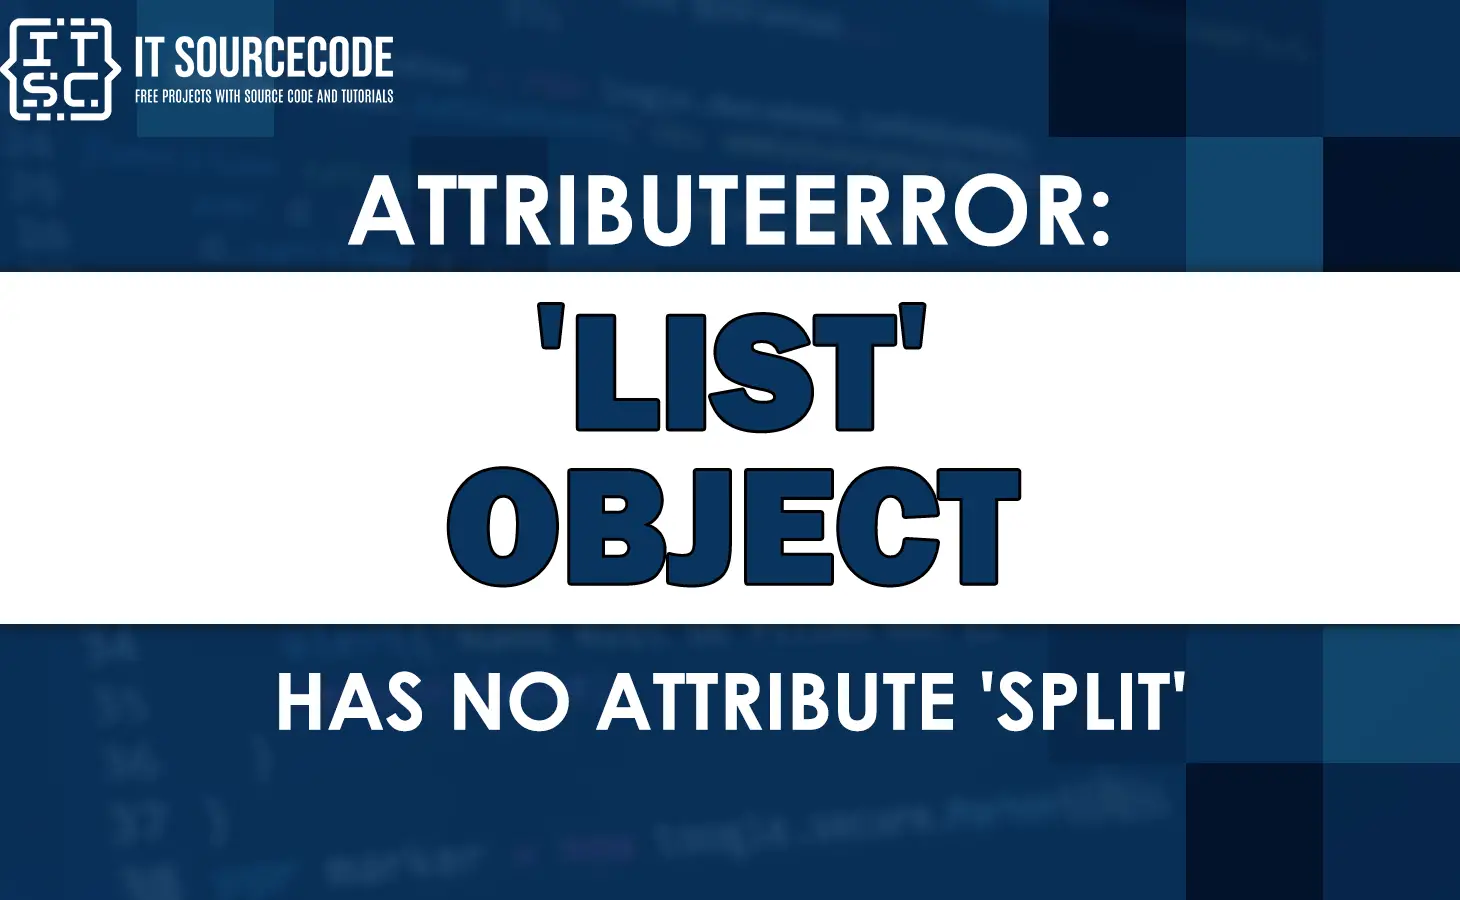 Attributeerror: list object has no attribute split [SOLVED]